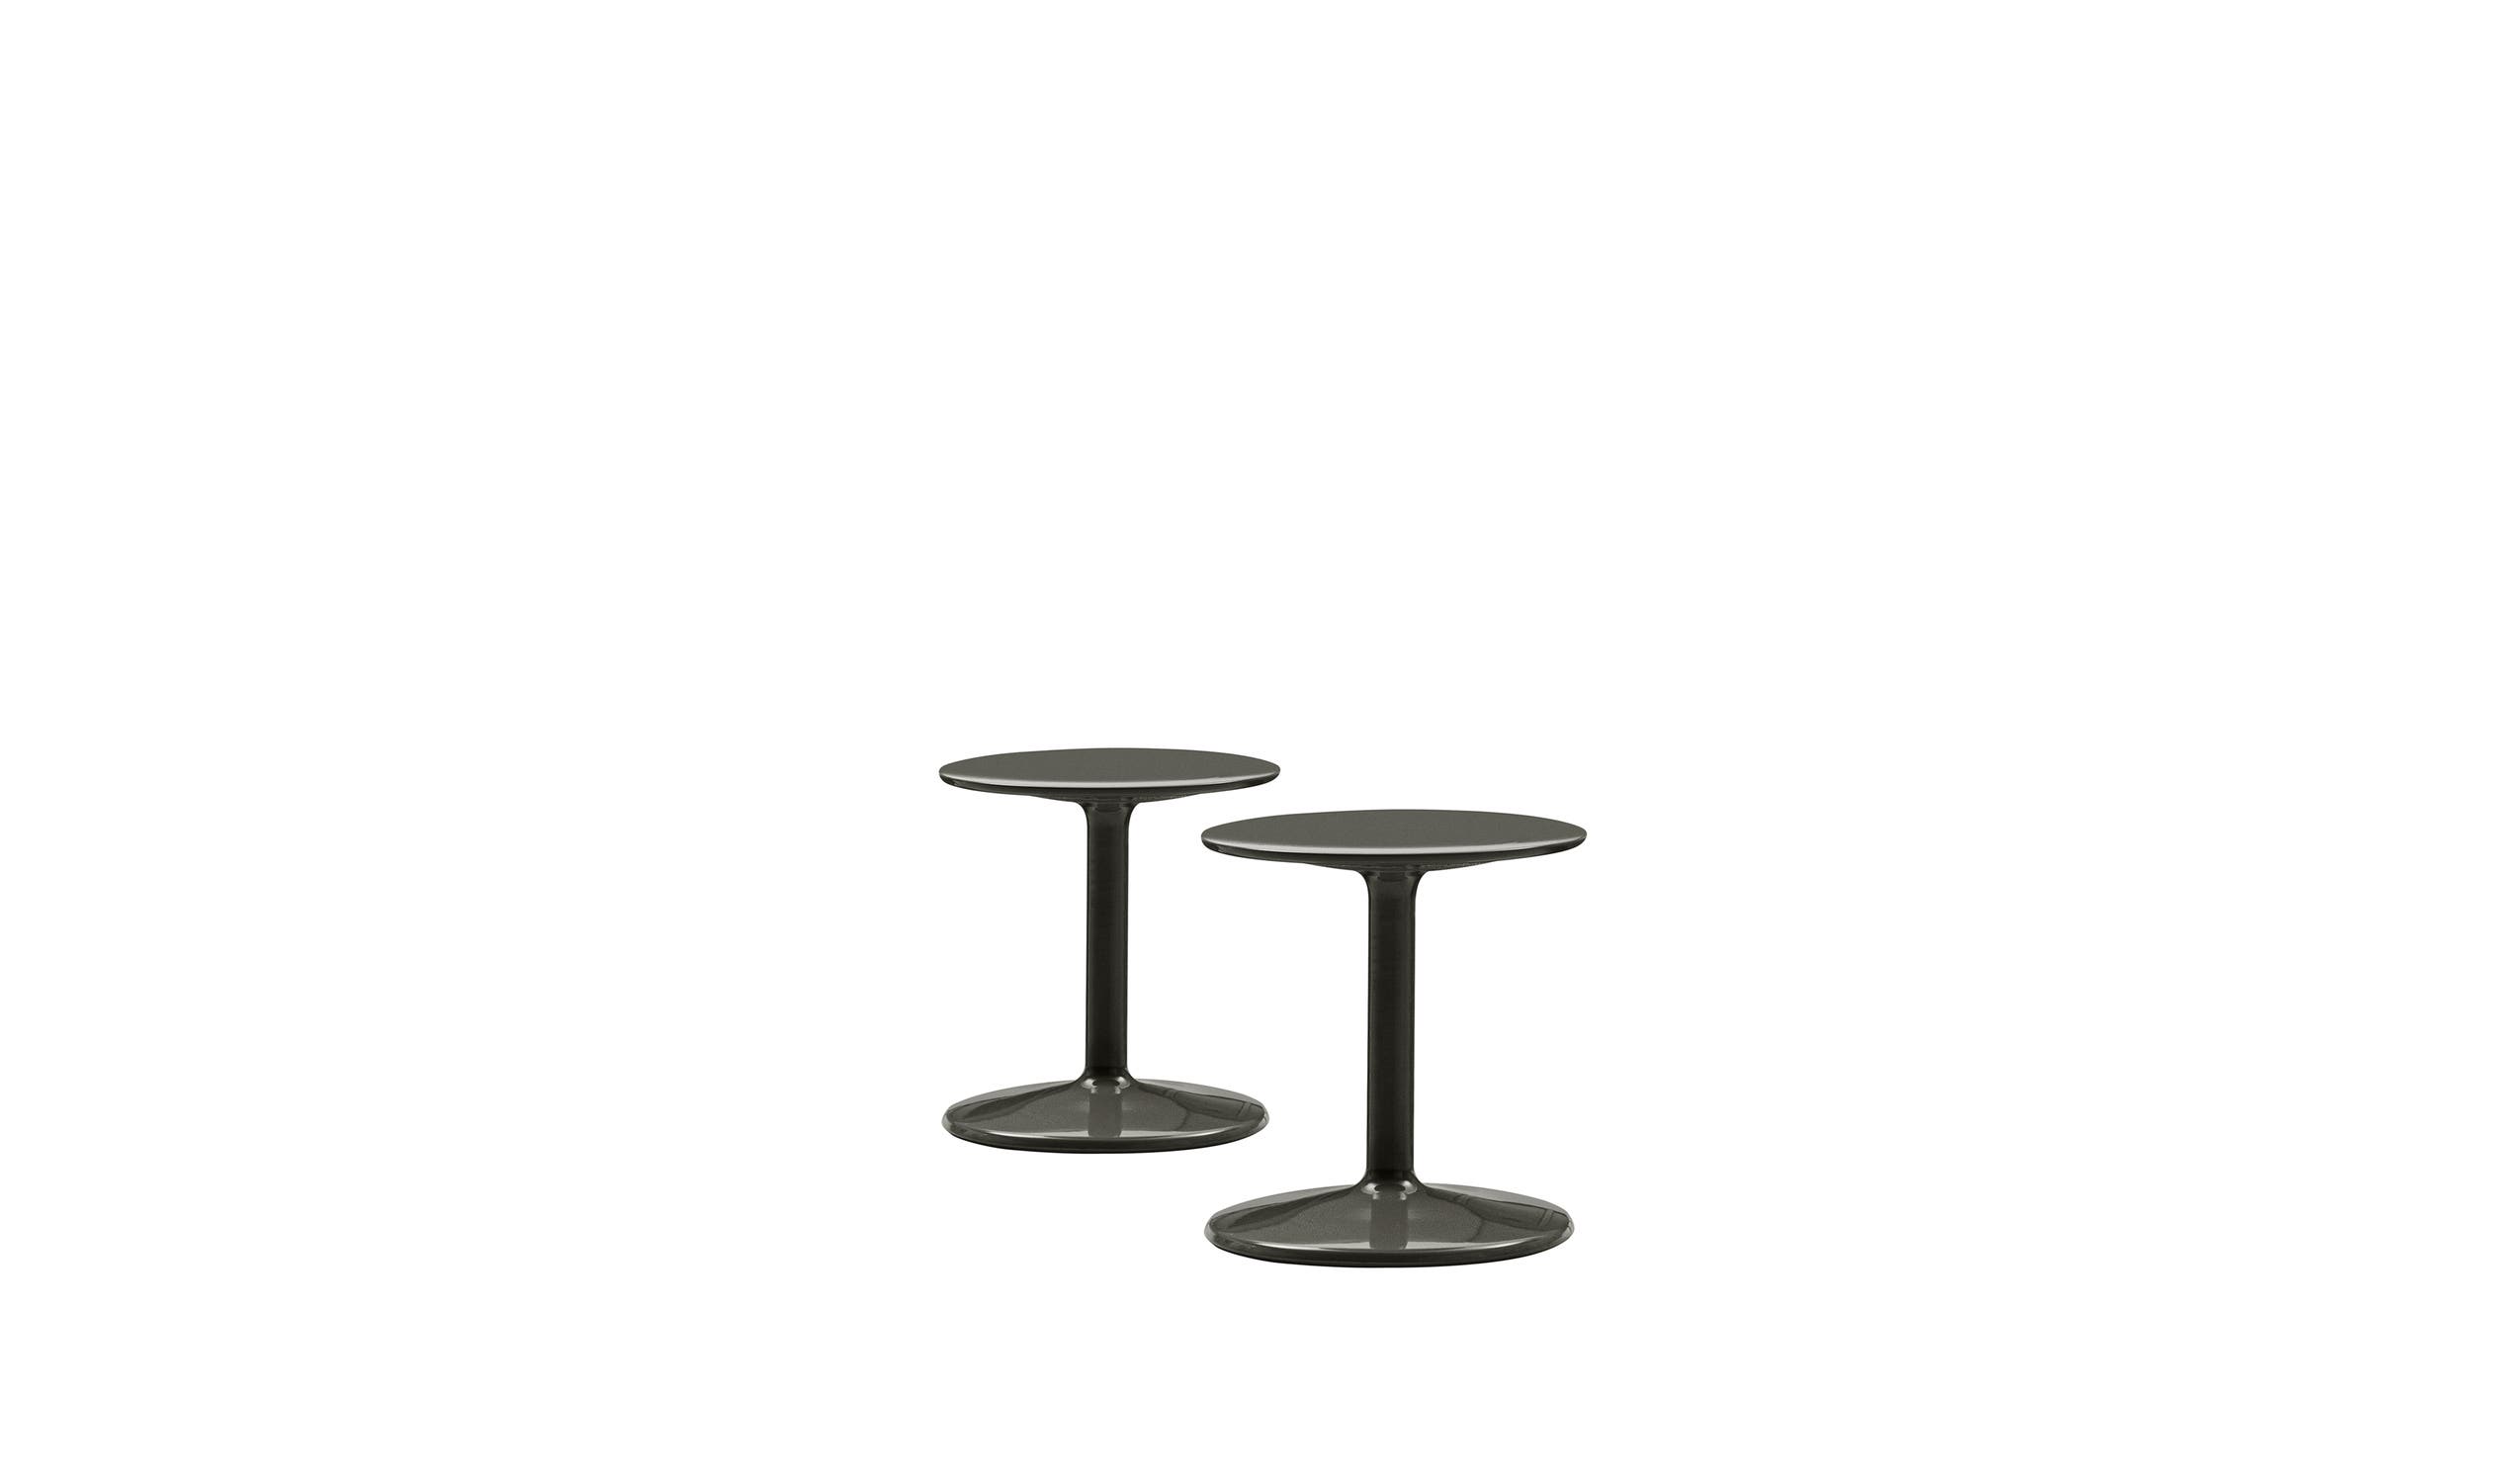 Designer italian modern small tables  - Spool Outdoor Small tables